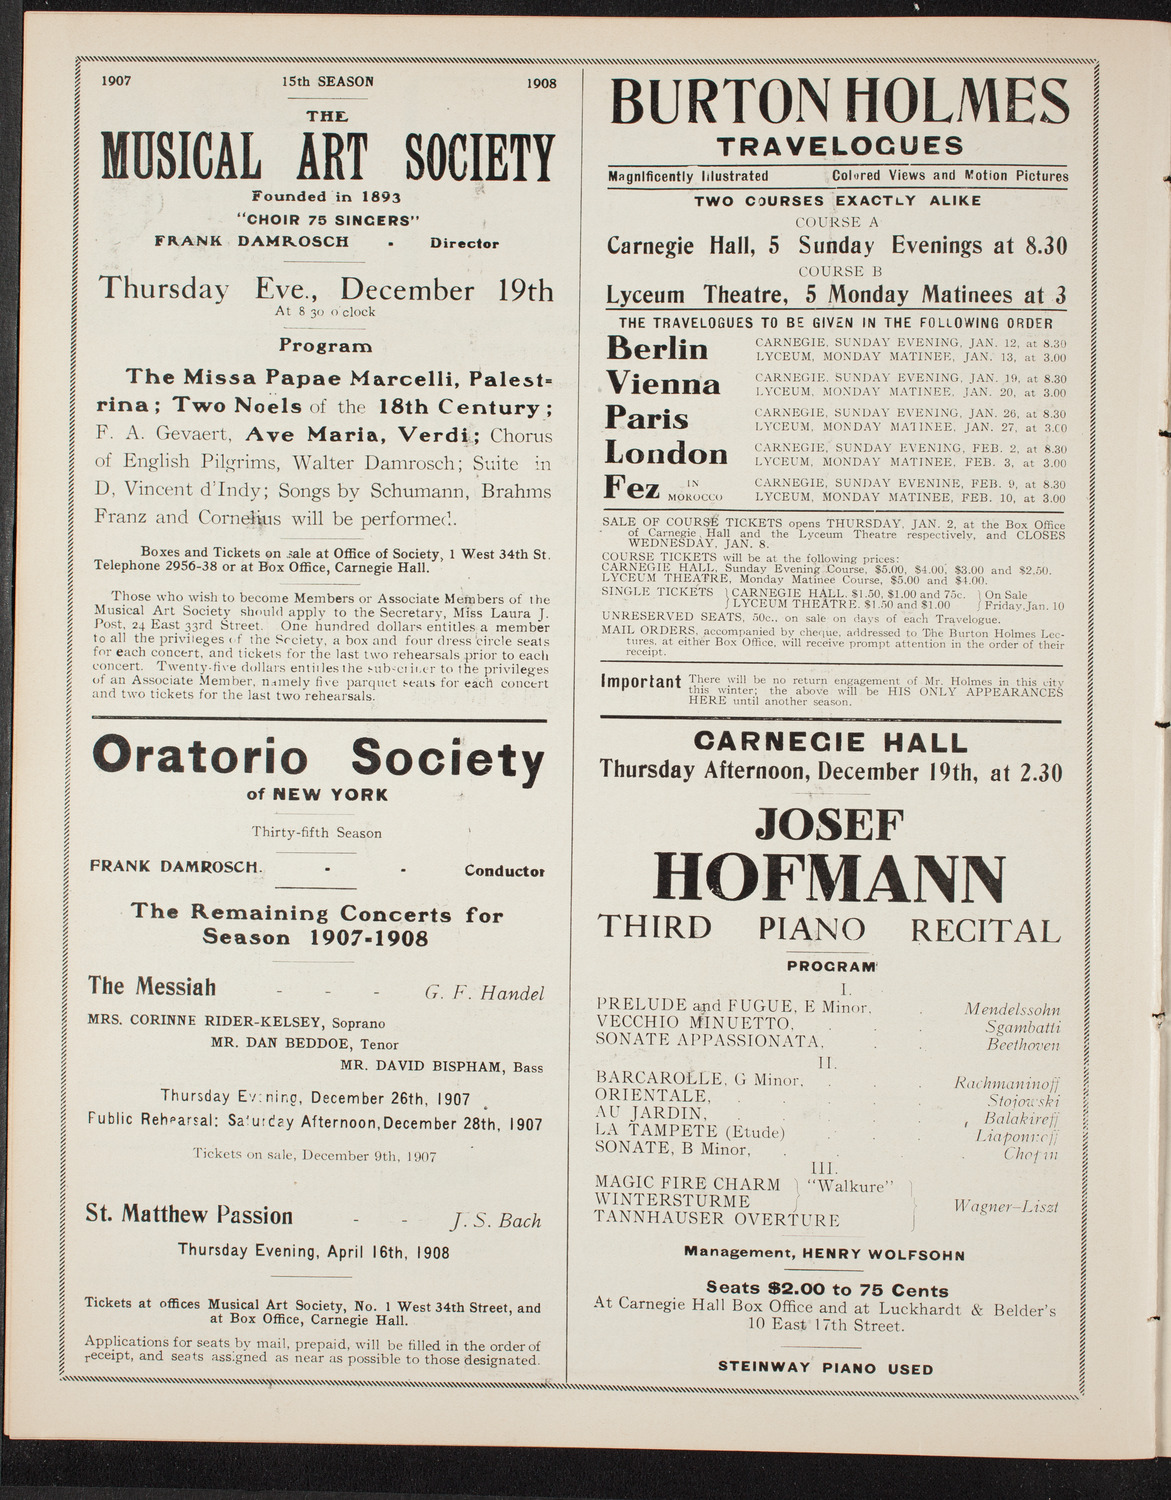 New York Philharmonic, December 13, 1907, program page 10